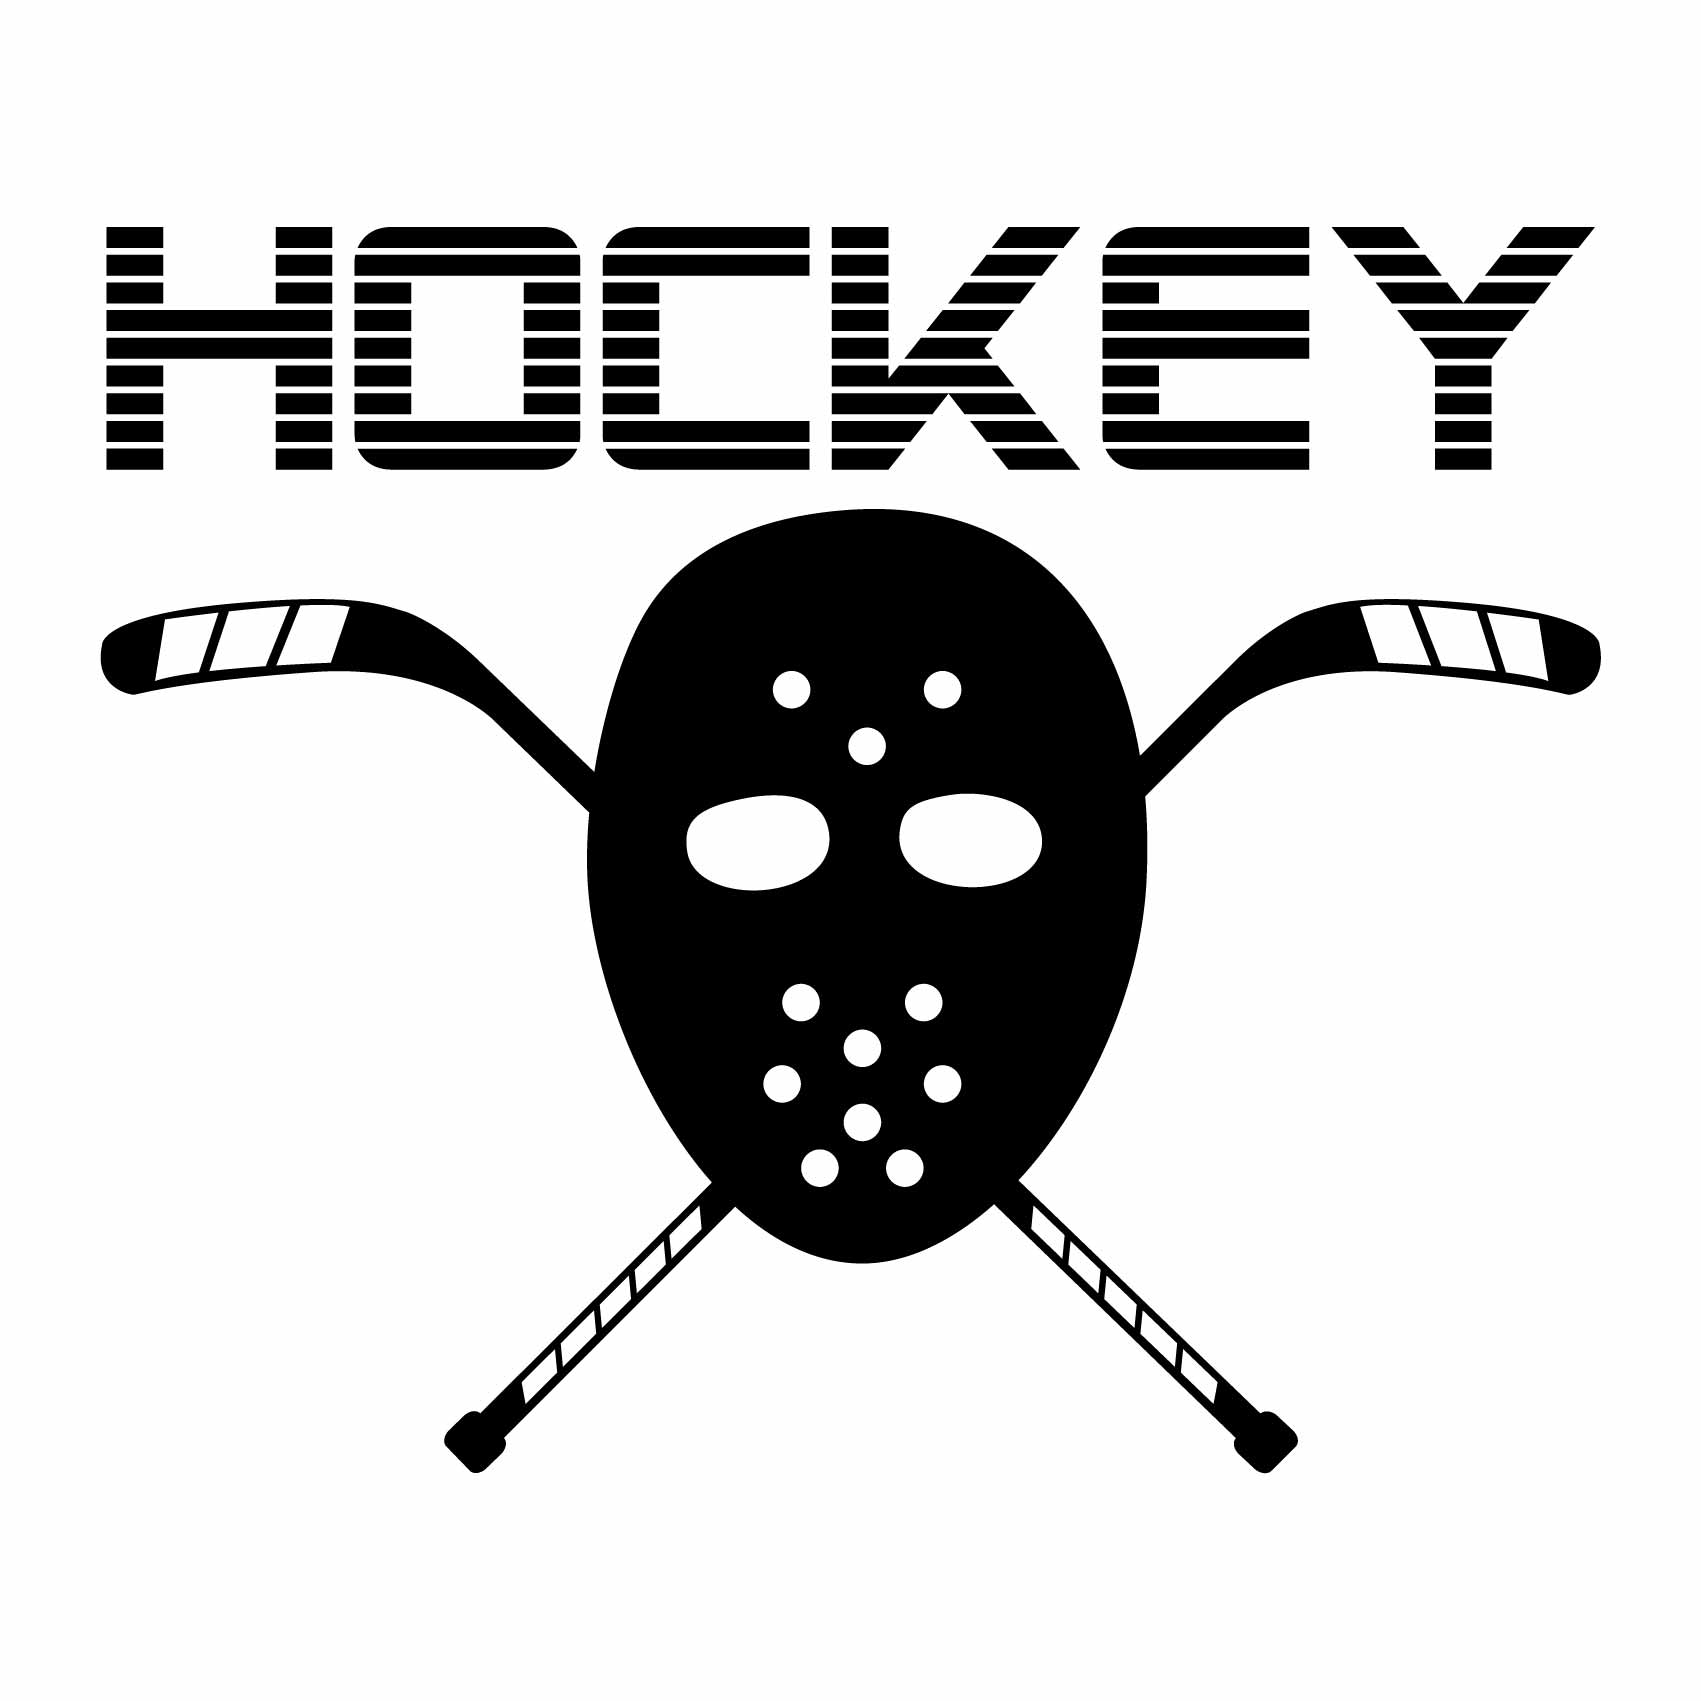 stickers-hockey-ref12sport-stickers-muraux-hockey-sur-glace-autocollant-hockey-deco-chambre-enfant-salon-sticker-mural-sport-(2)